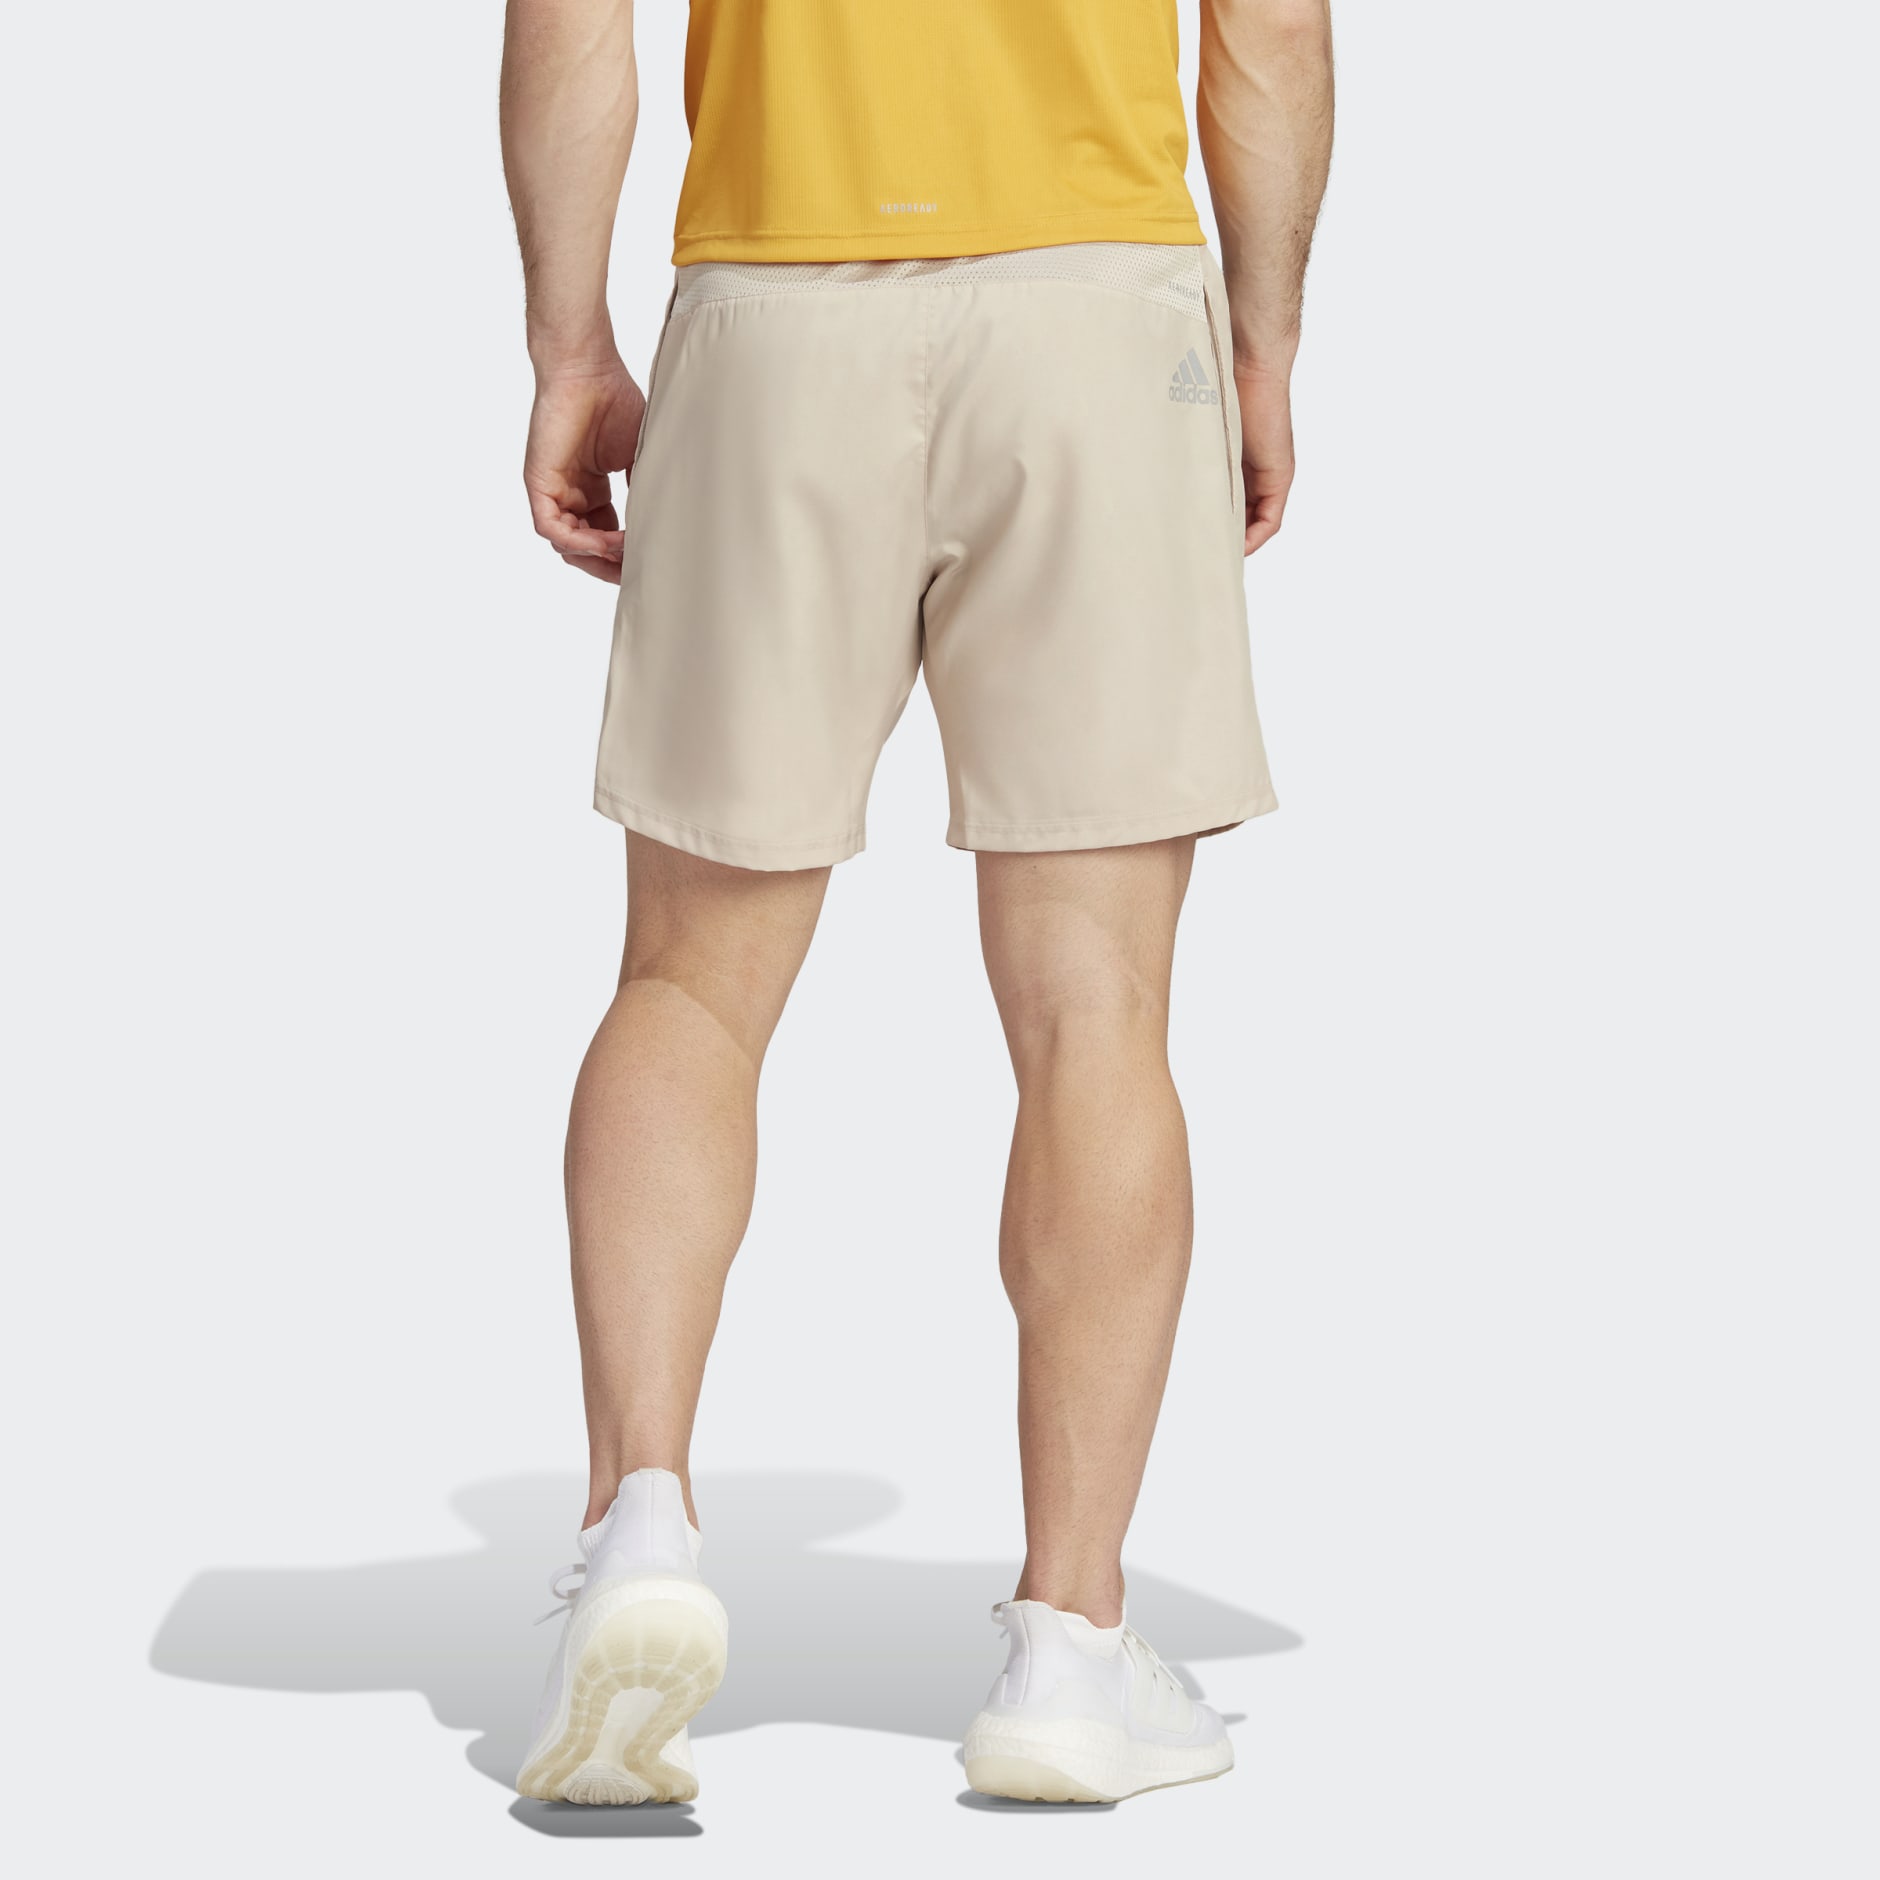 Men's Clothing - Run It Shorts - Beige | adidas Saudi Arabia